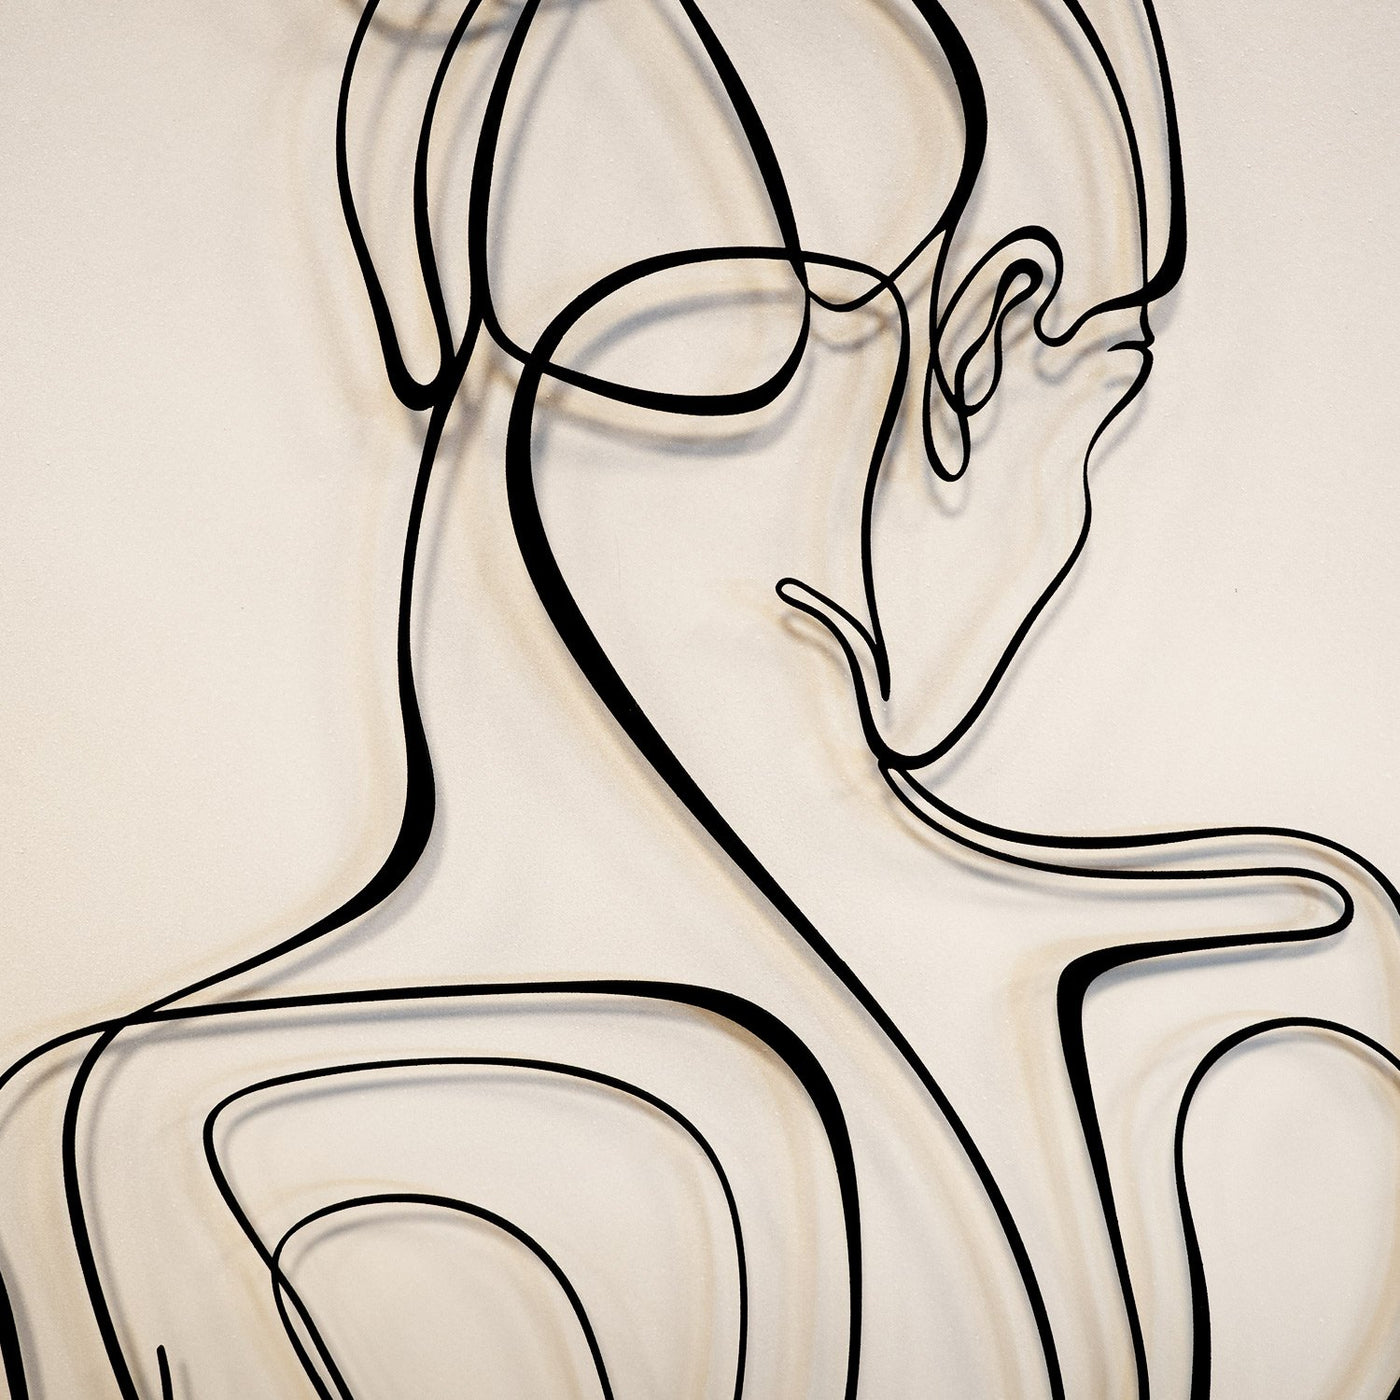 Woman Silhouette Line Art